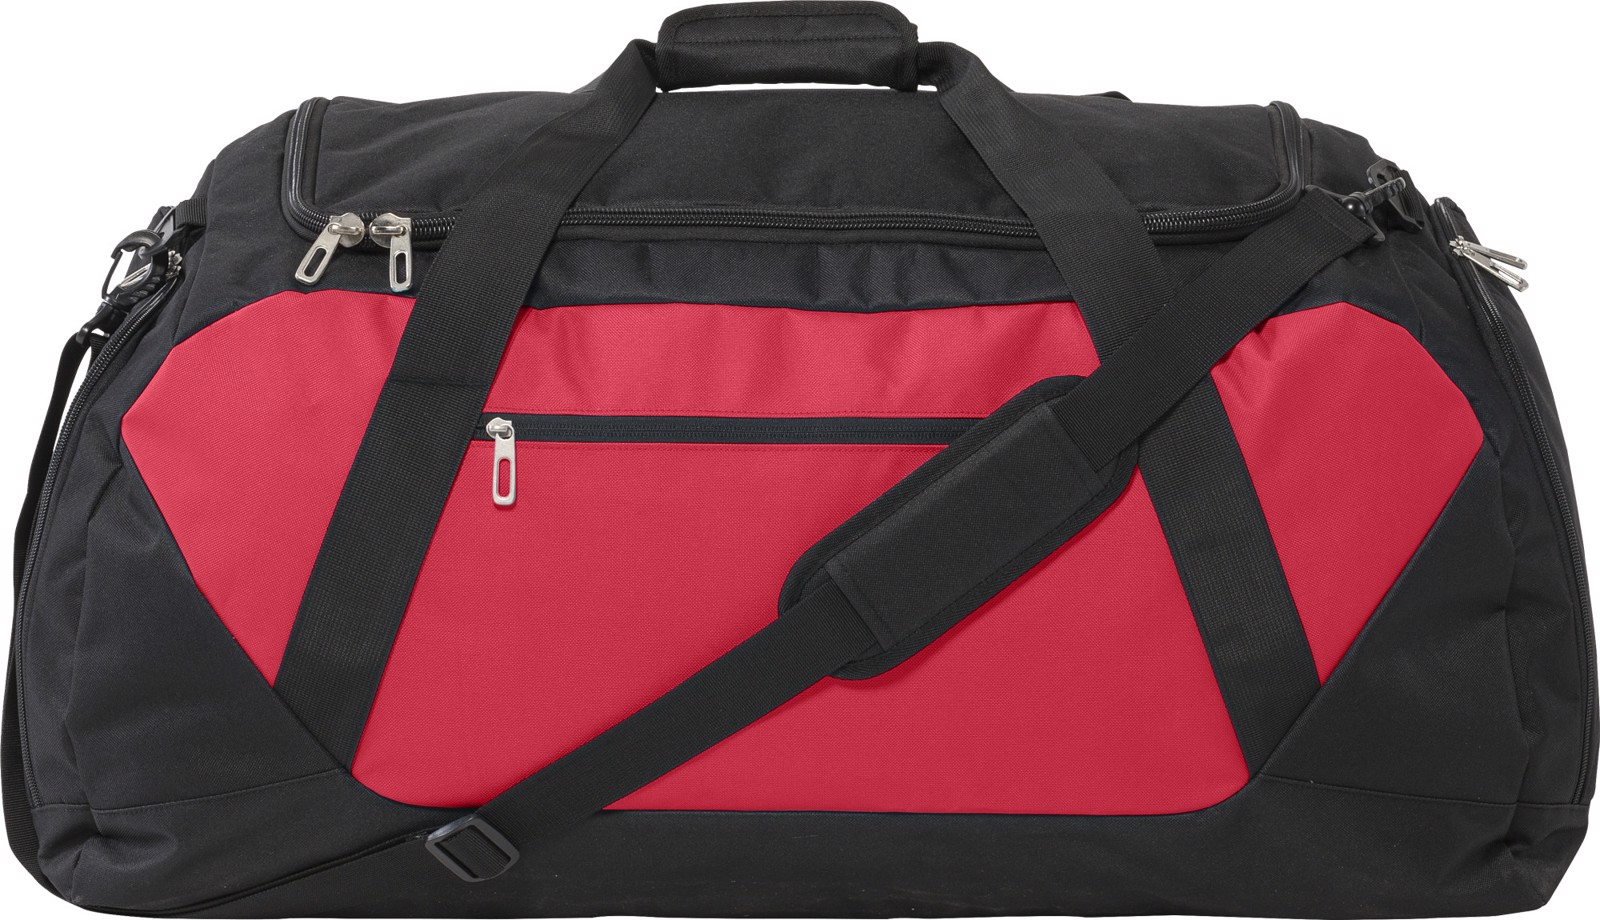 Polyester (600D) sports bag - Black / Red